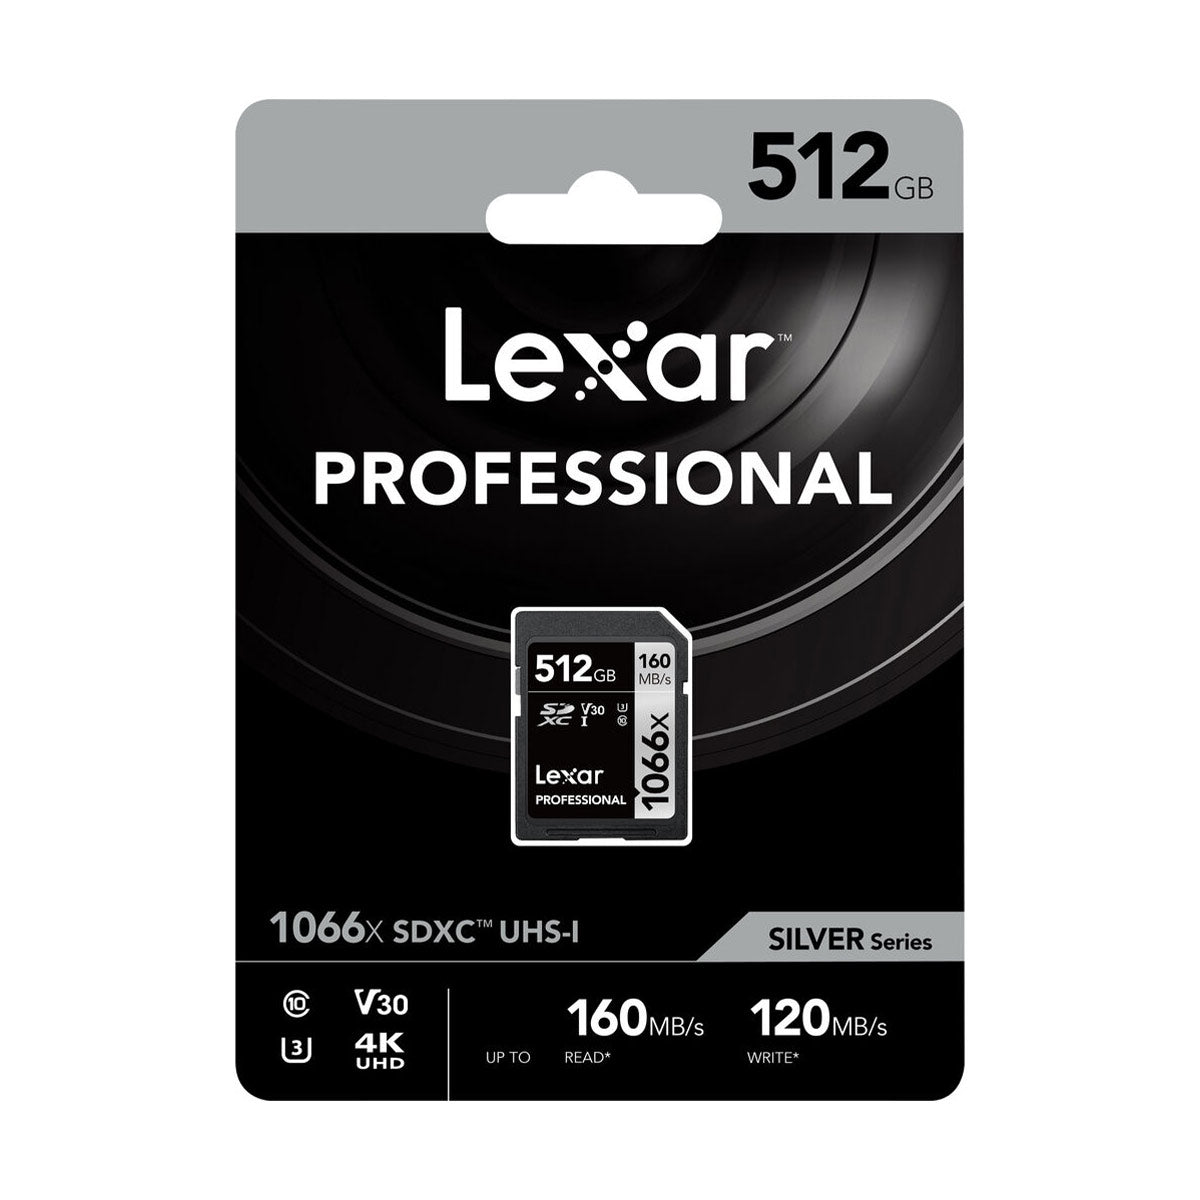 Lexar 512GB Professional 1066x UHS-I V30 SDXC Memory Card